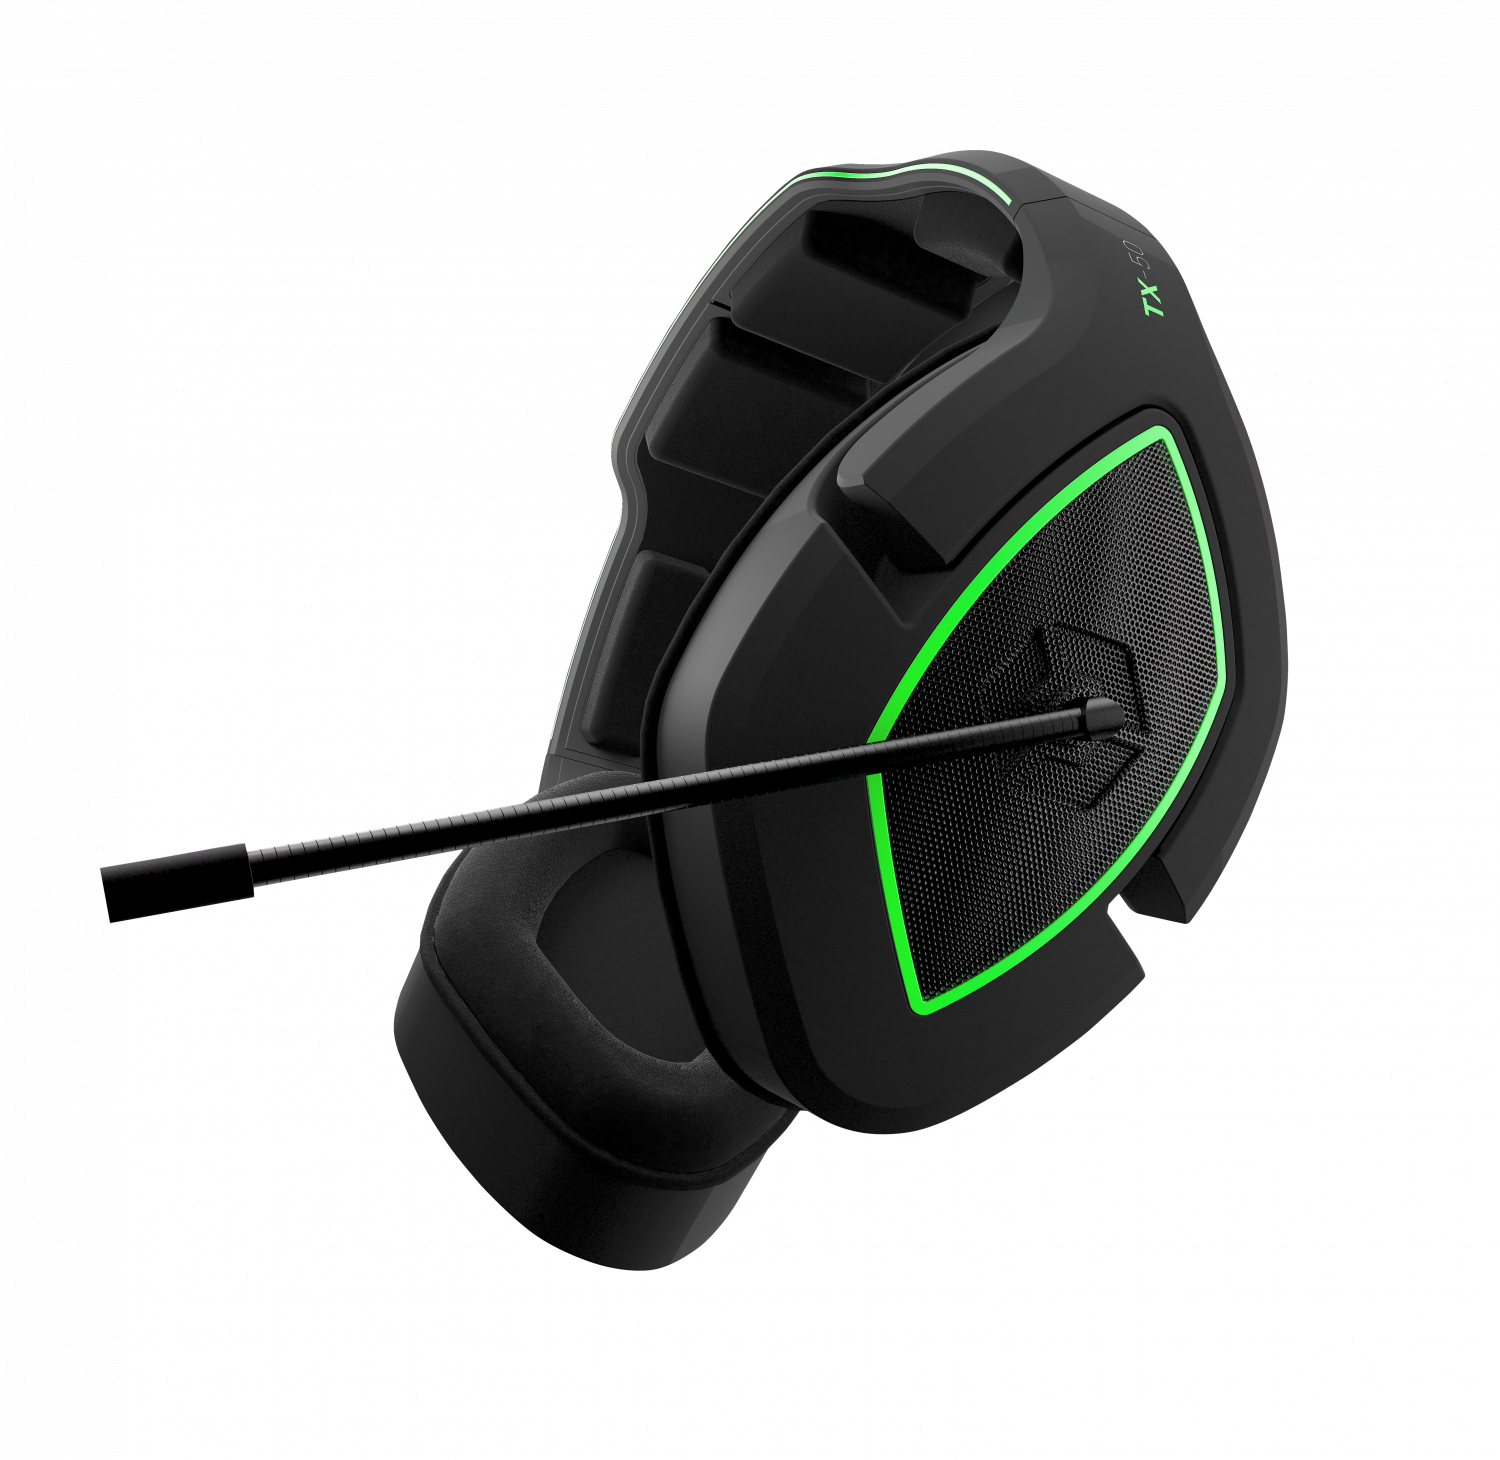 TX-50 RF Stereo Gaming Headset (Black/Green) (Uni)